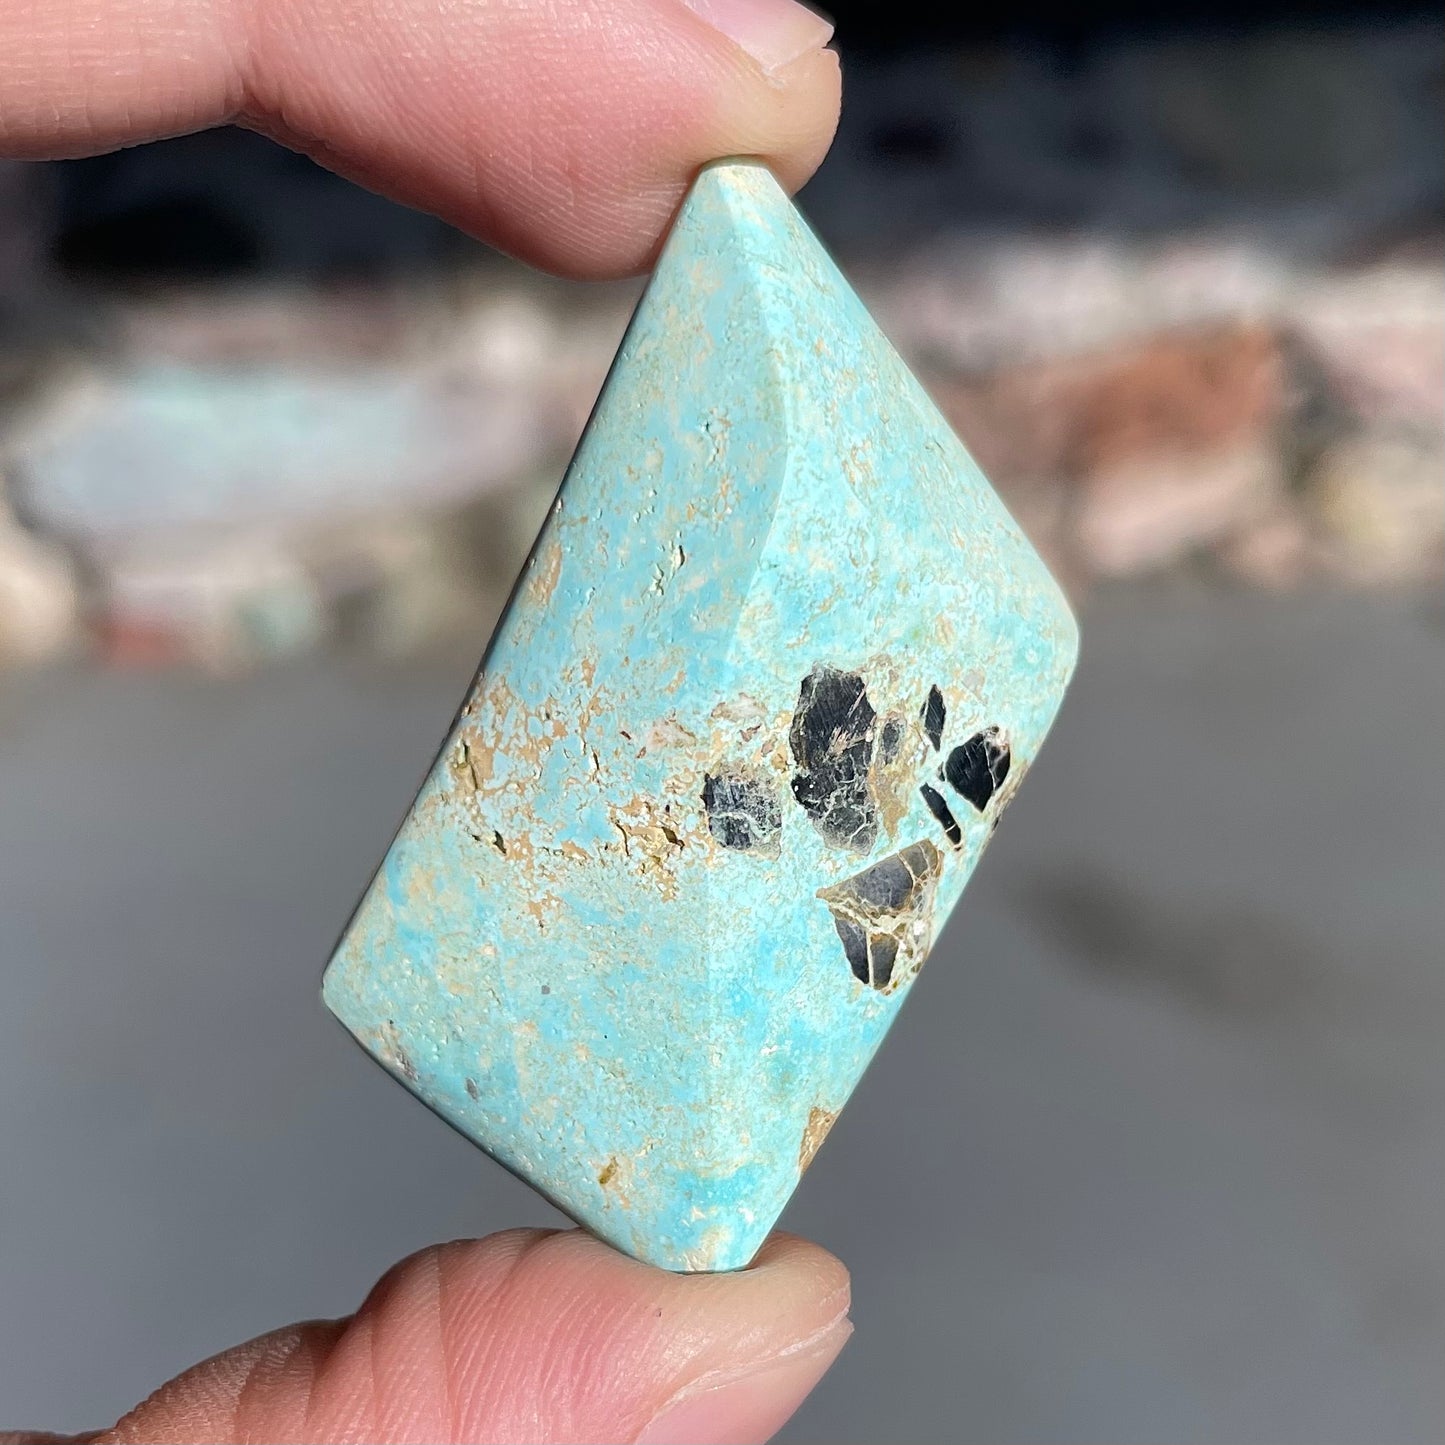 Polished baby blue turquoise specimen from Baja California, Mexico.